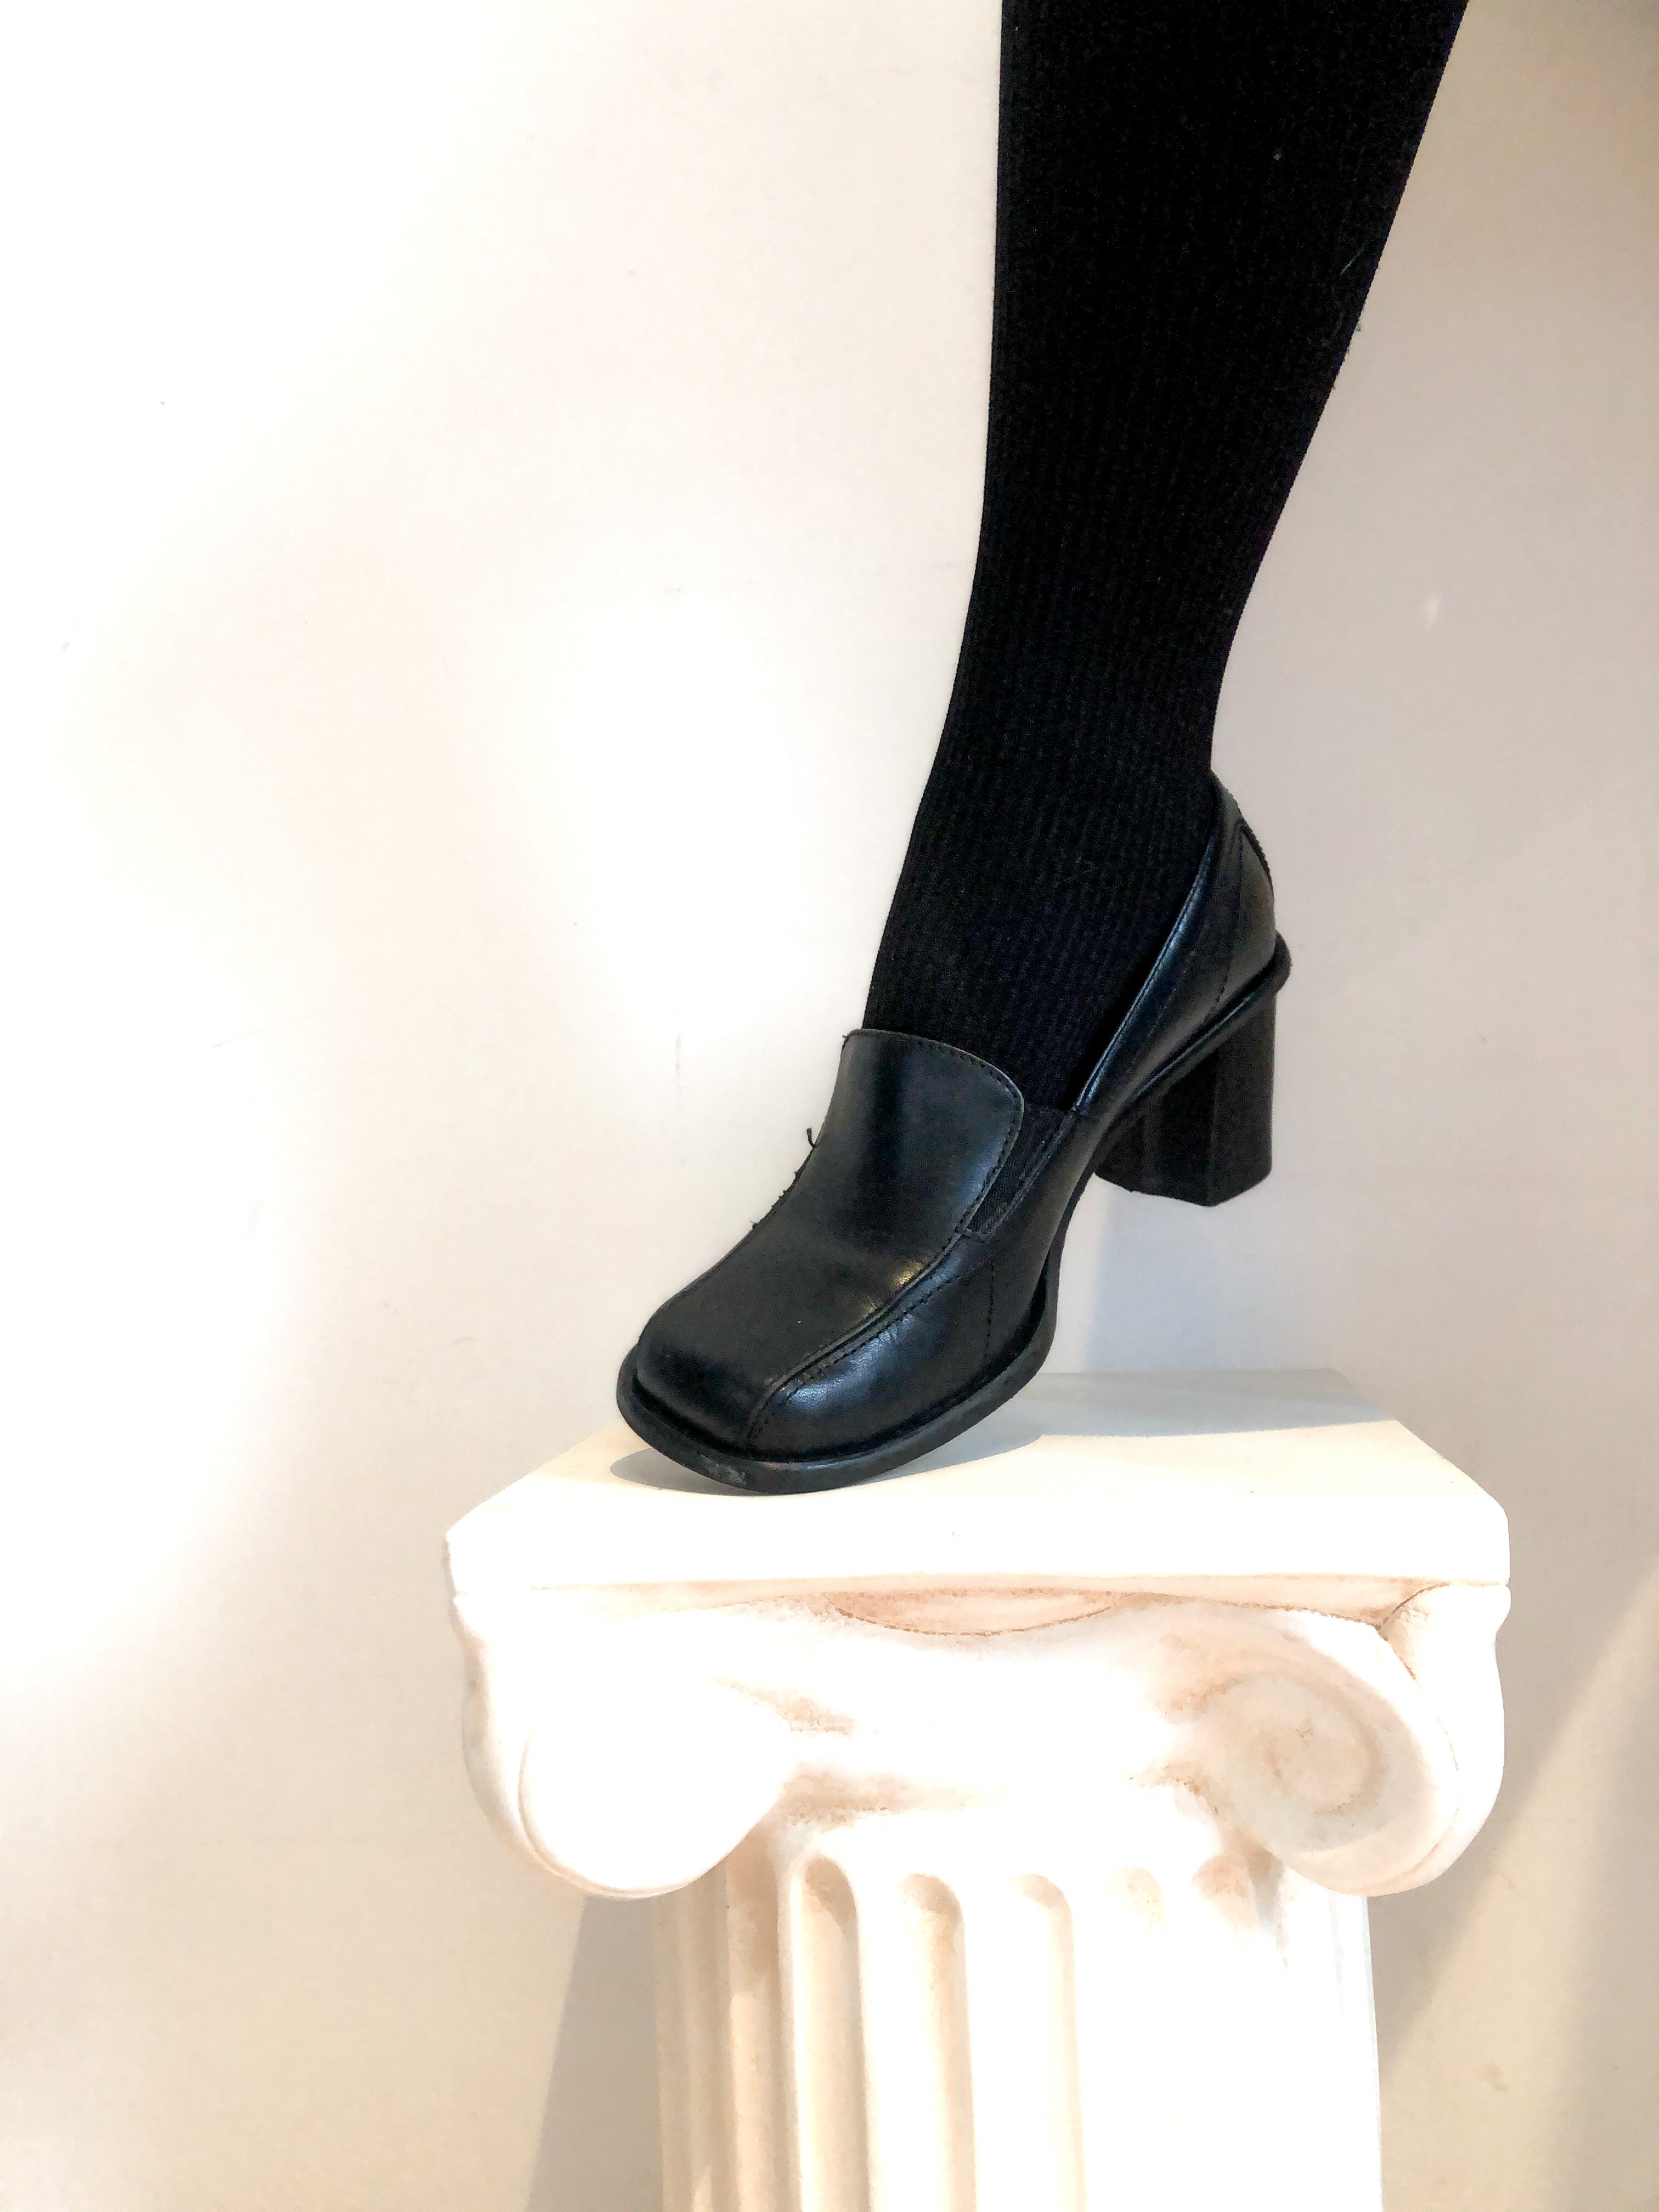 mudd loafer heels | Vinted